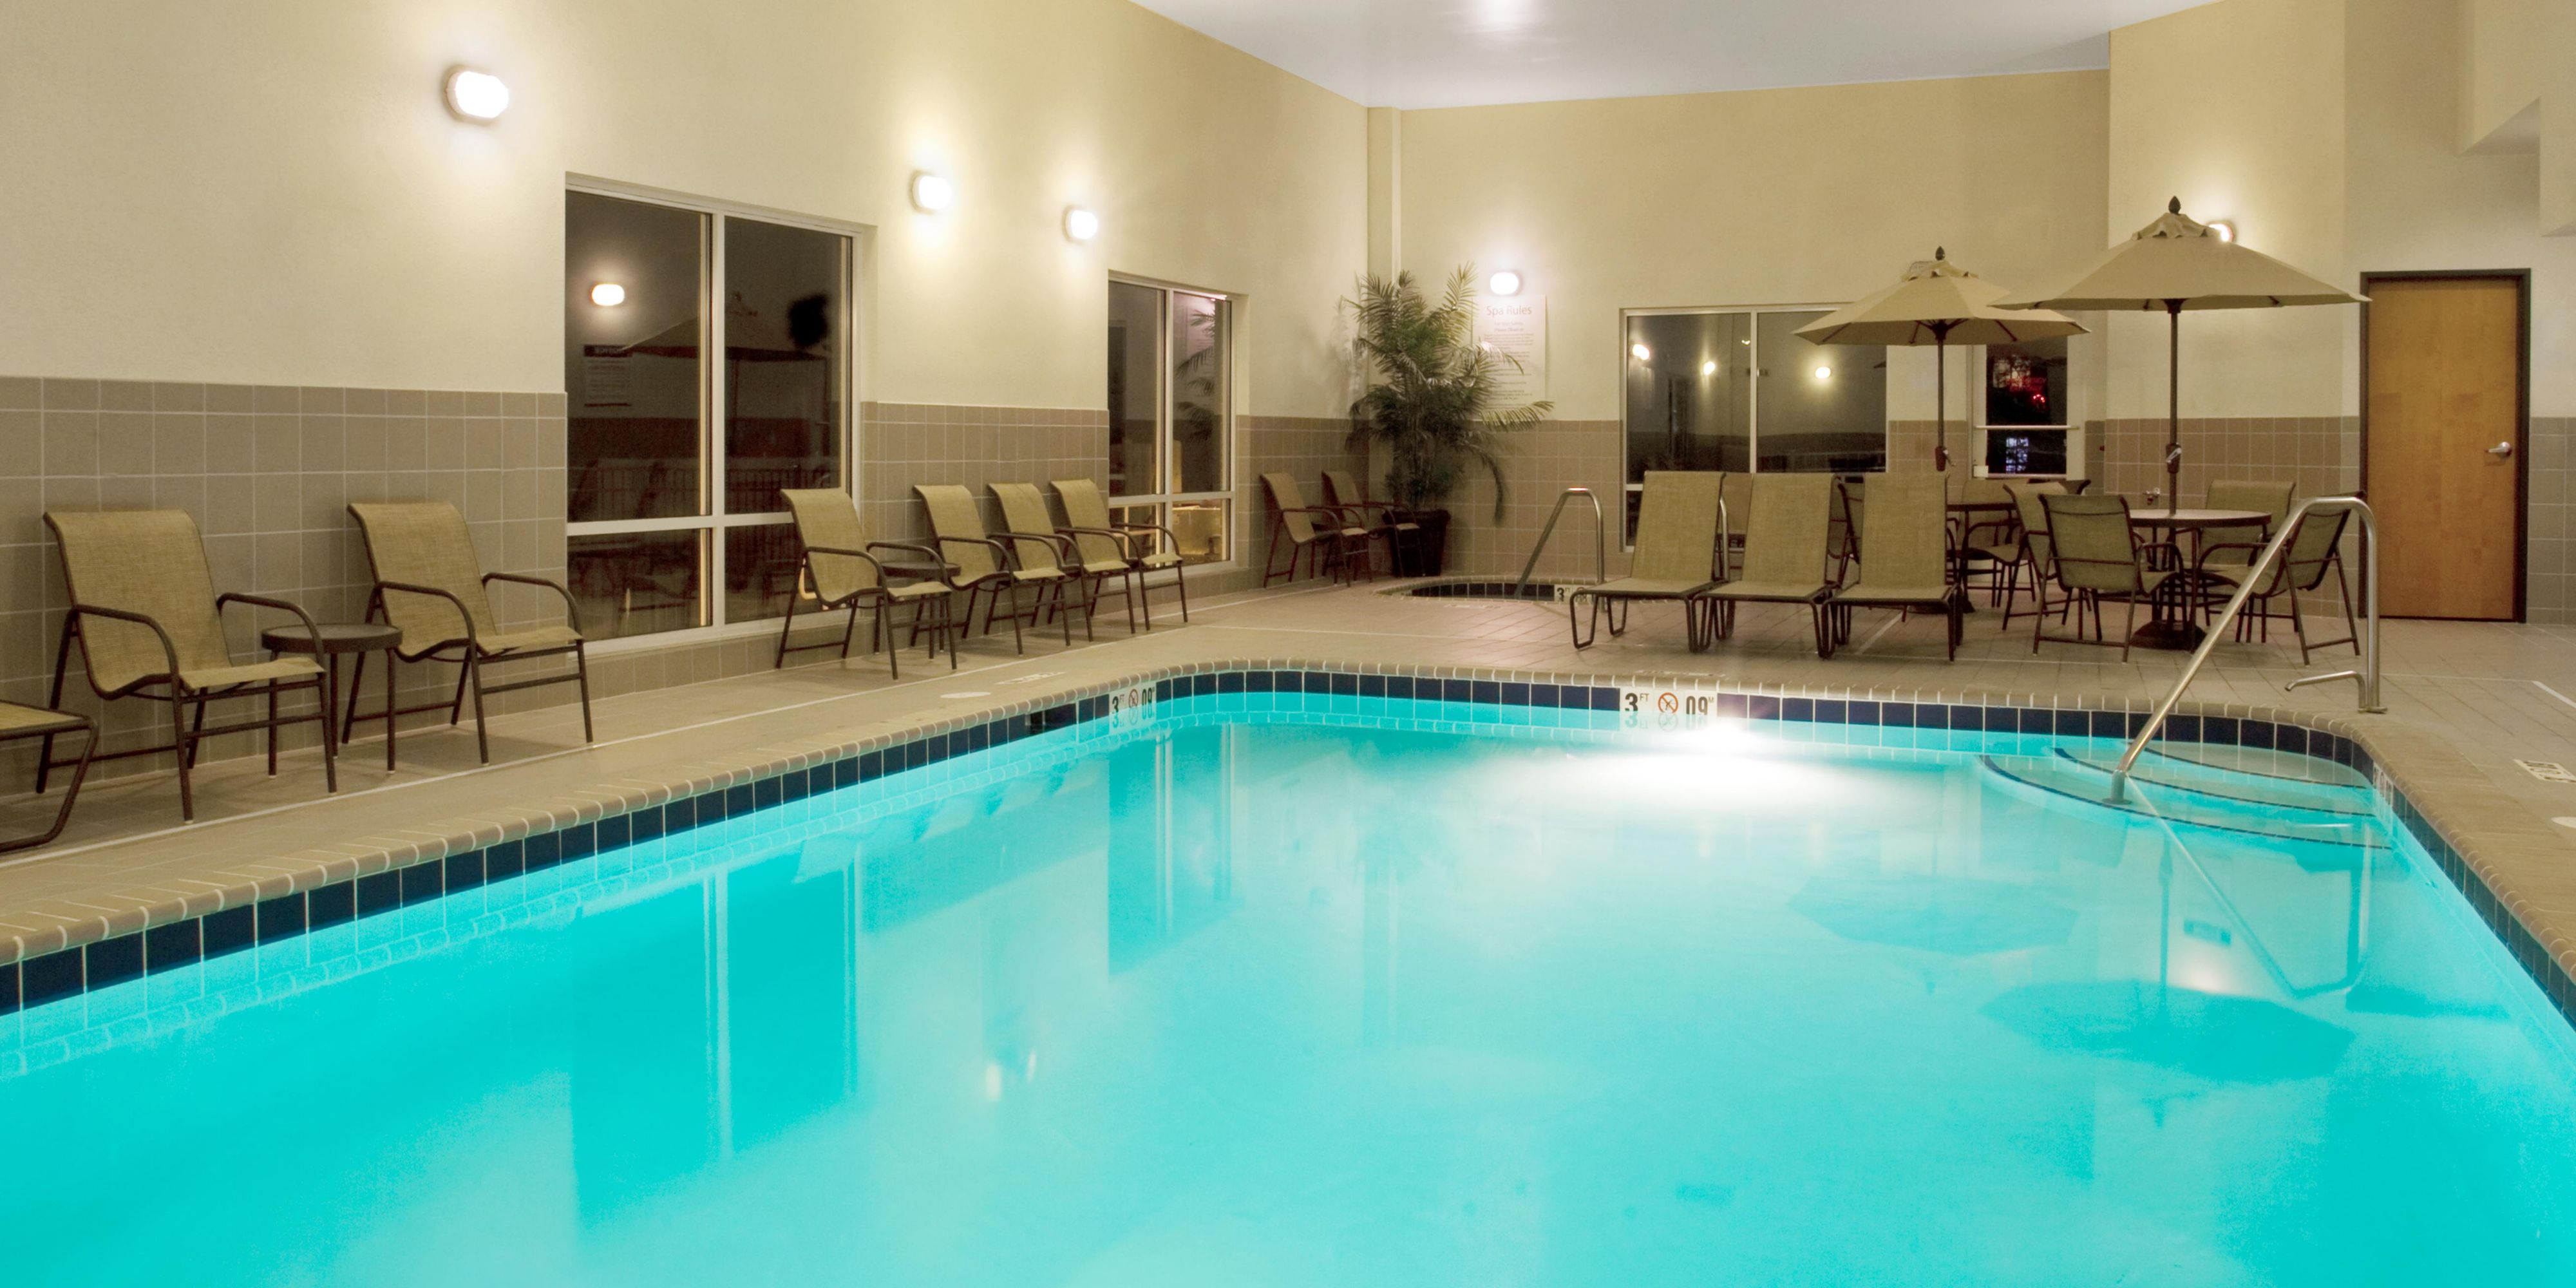 Enjoy a refreshing dip in our indoor pool.